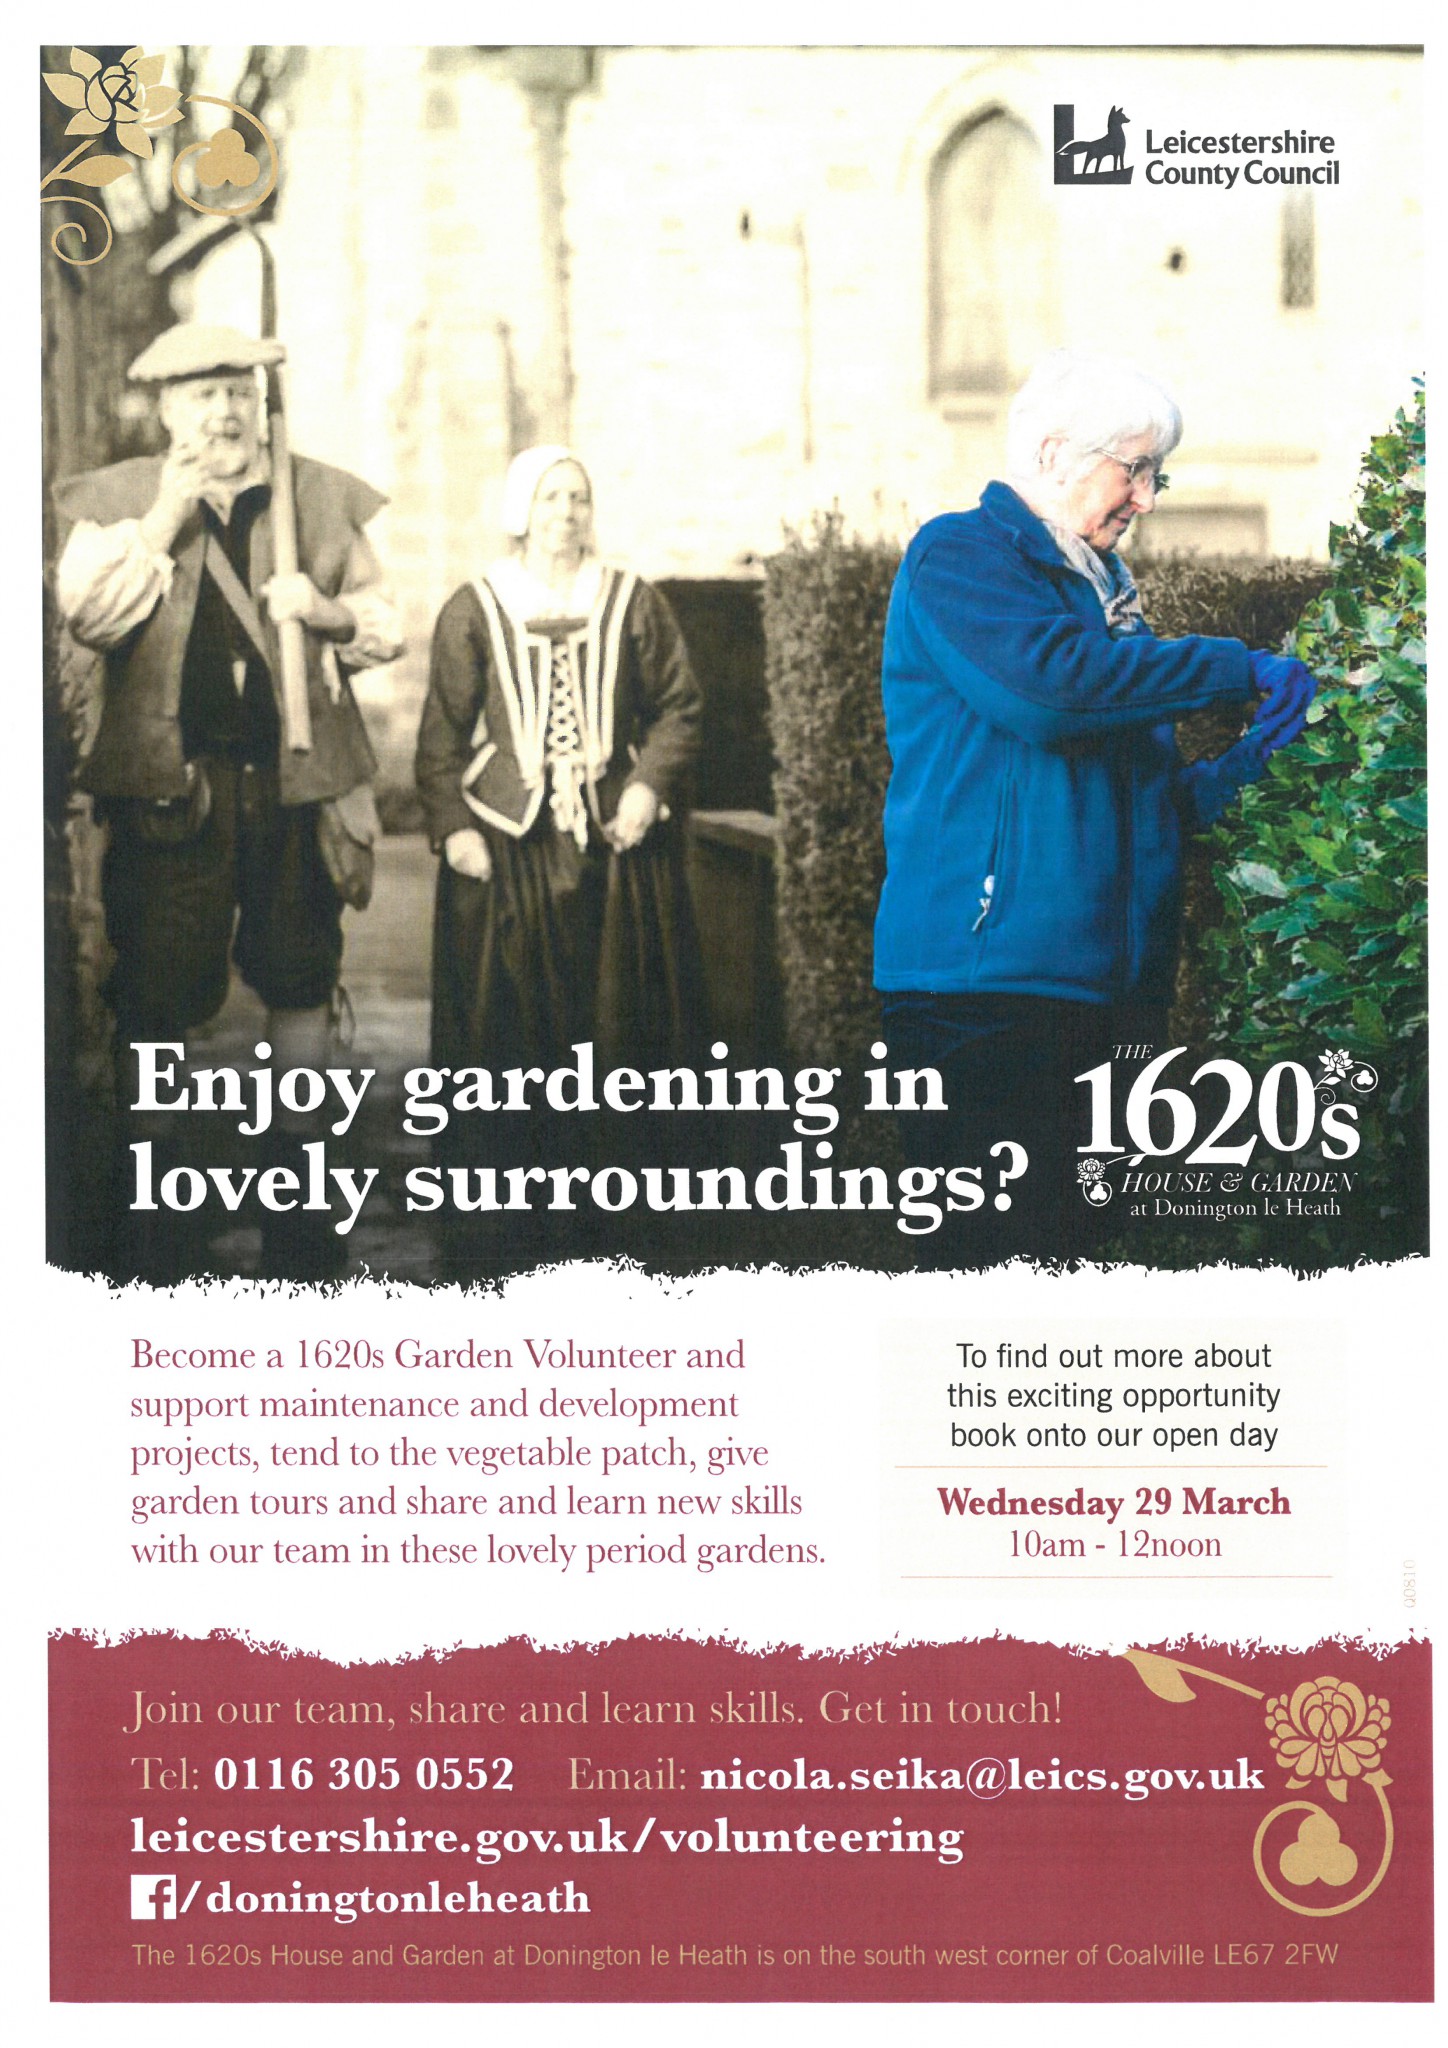 Become a 1620s Garden Volunteer - Open Day